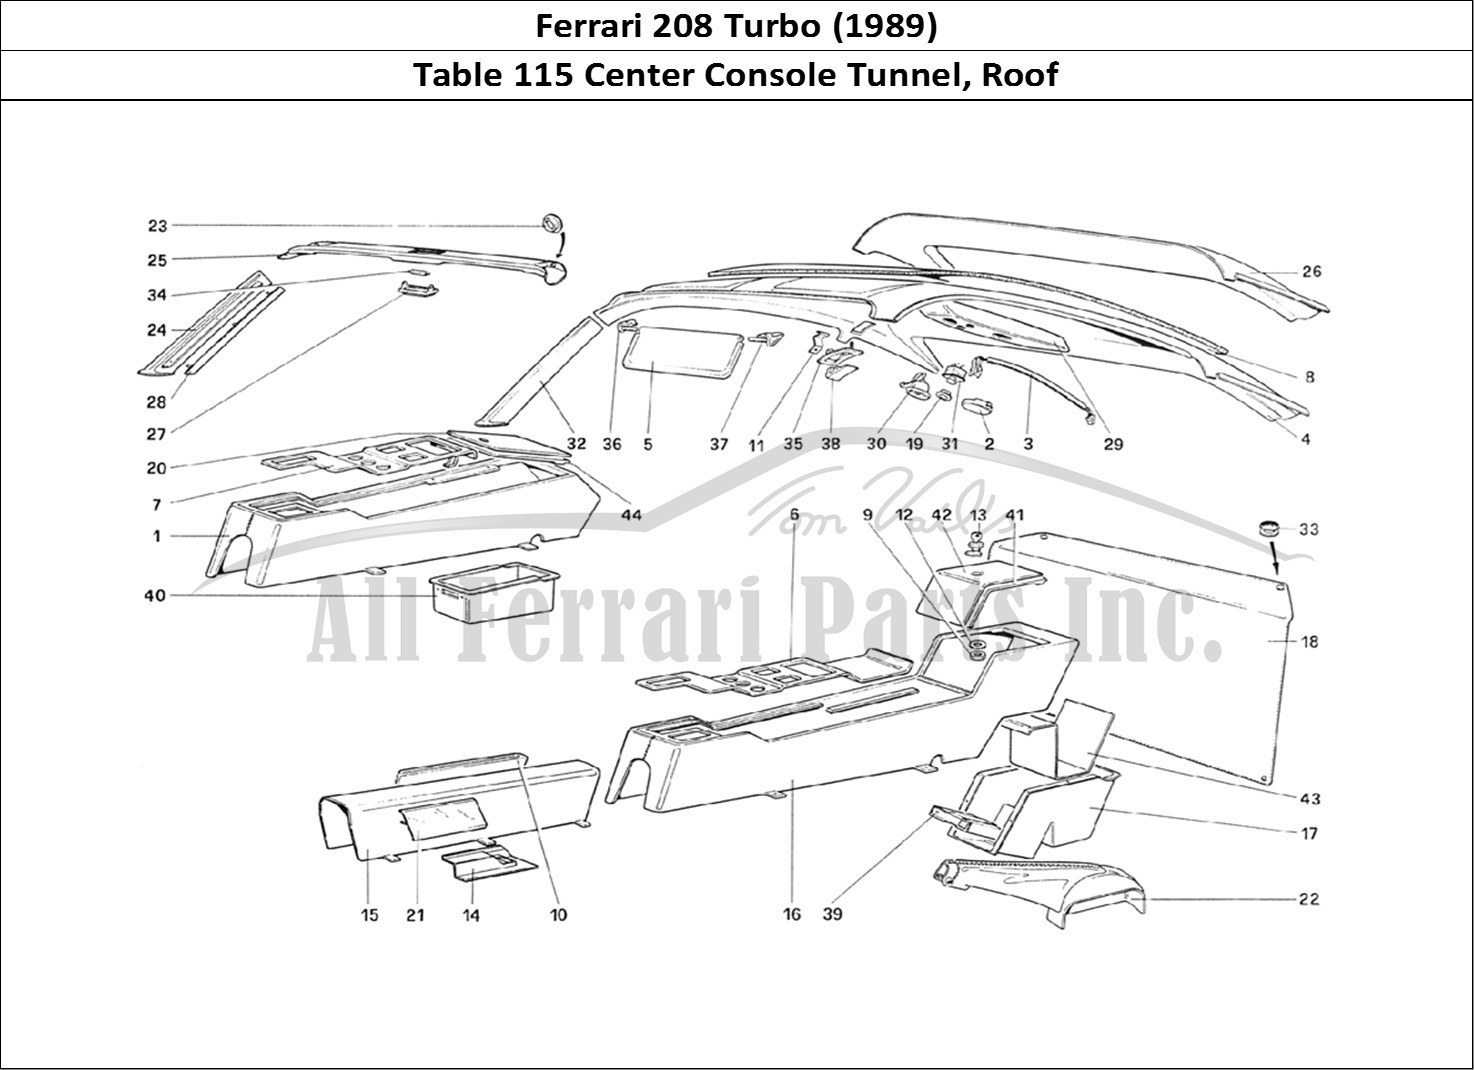 Ferrari Parts Ferrari 208 Turbo (1989) Page 115 Tunnel and Roof